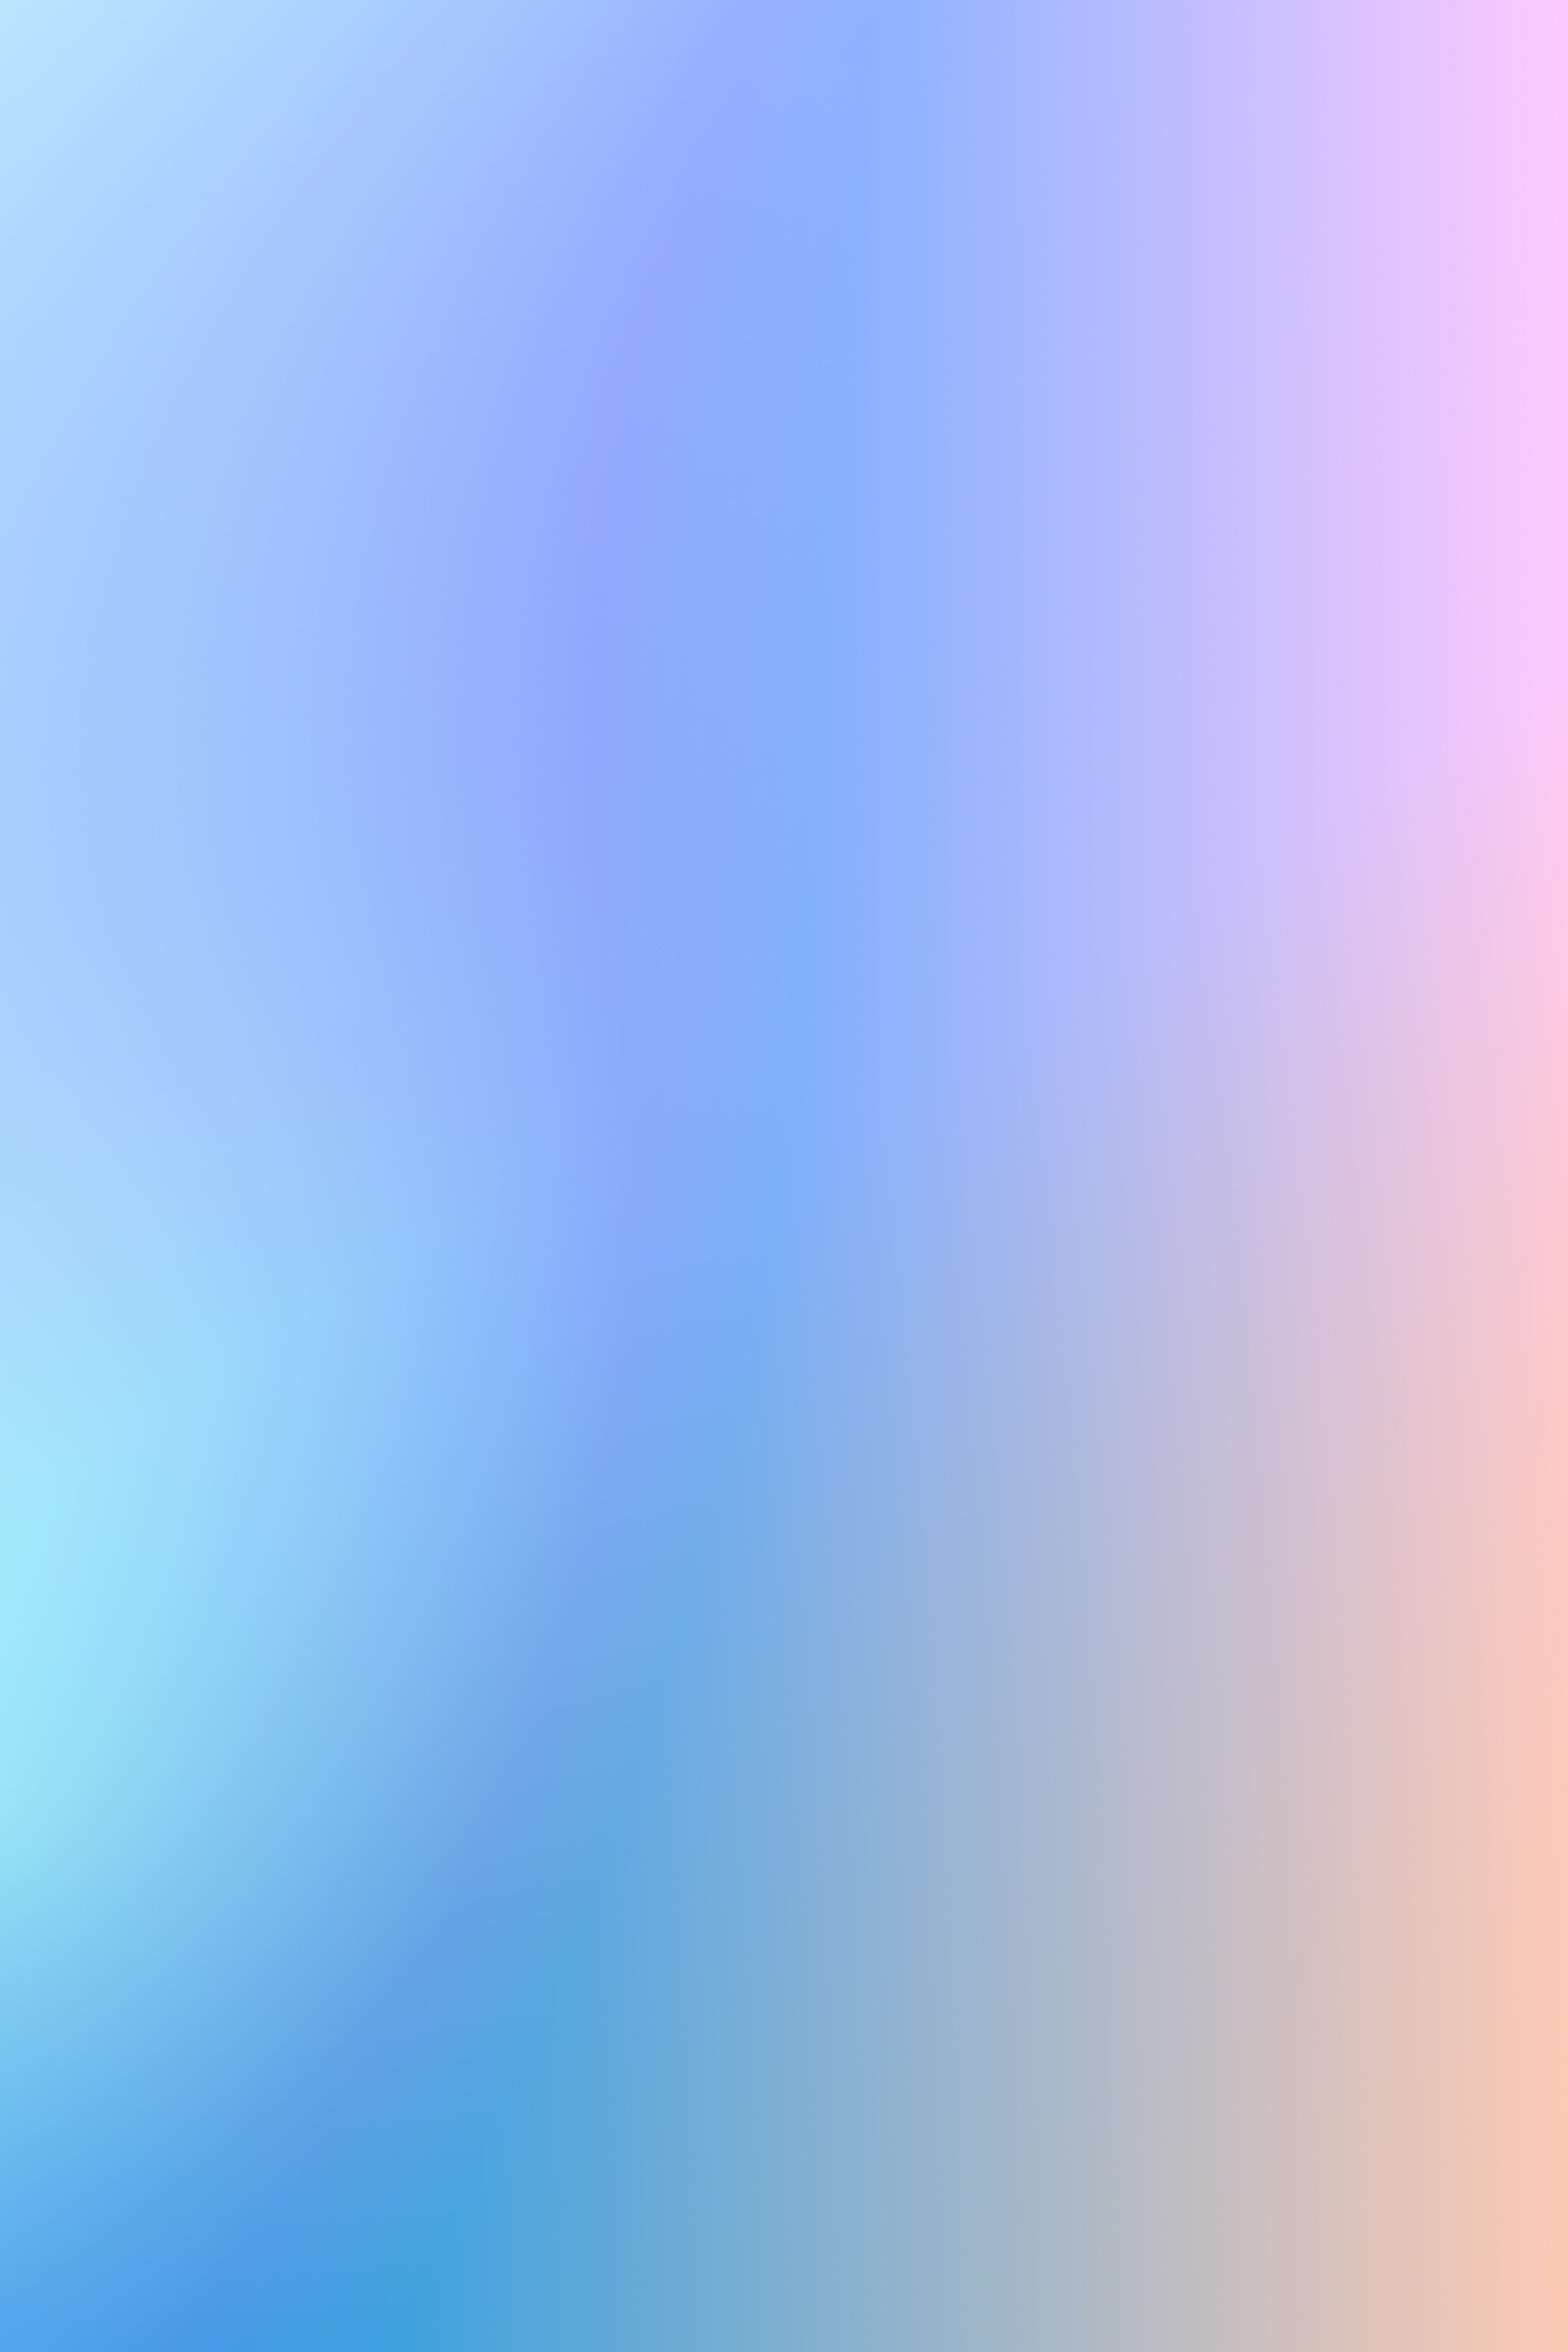 motley, pastel, abstract, multicolored, gradient